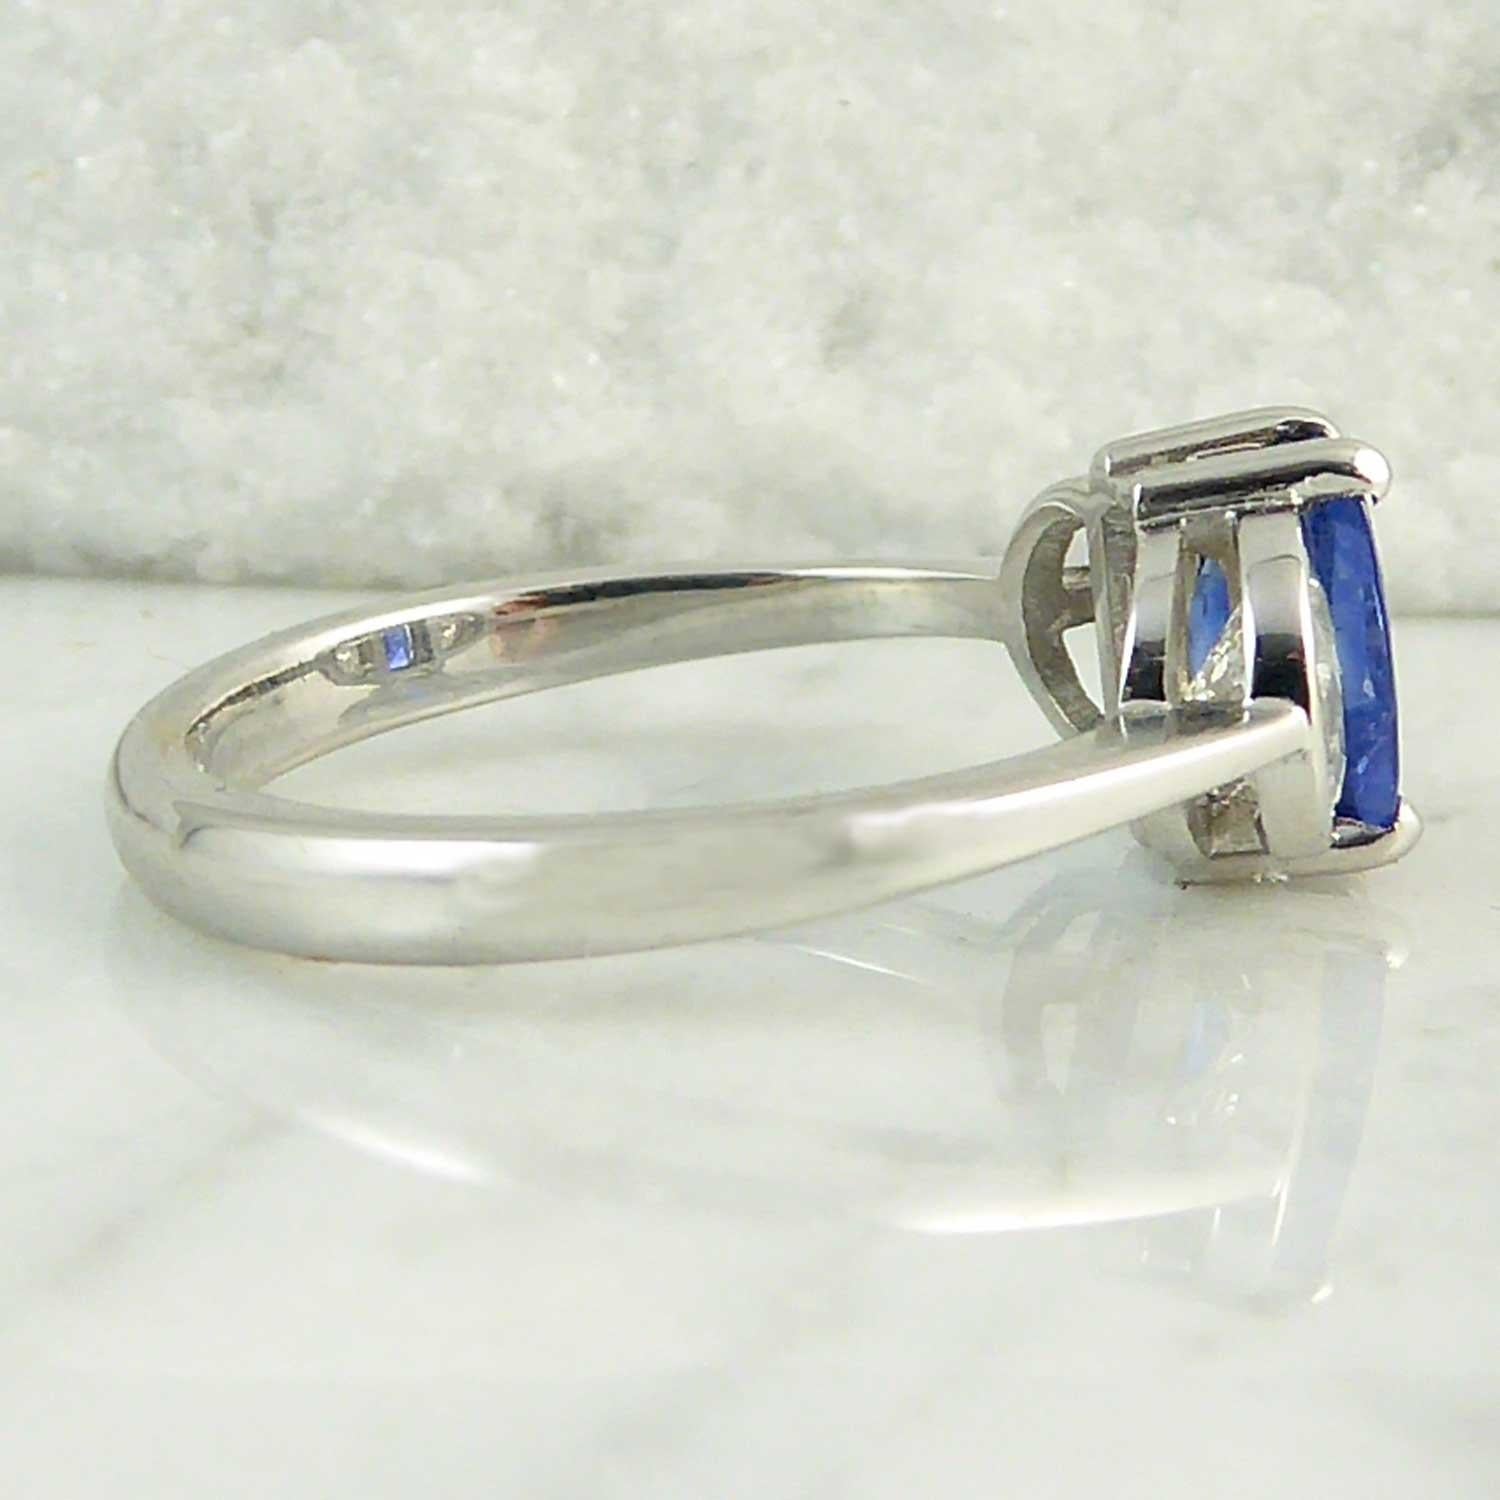 Oval Cut Modern 1.21 Carat Sapphire Ring, Half-Moon Diamonds 0.61 Carat, New and Unworn